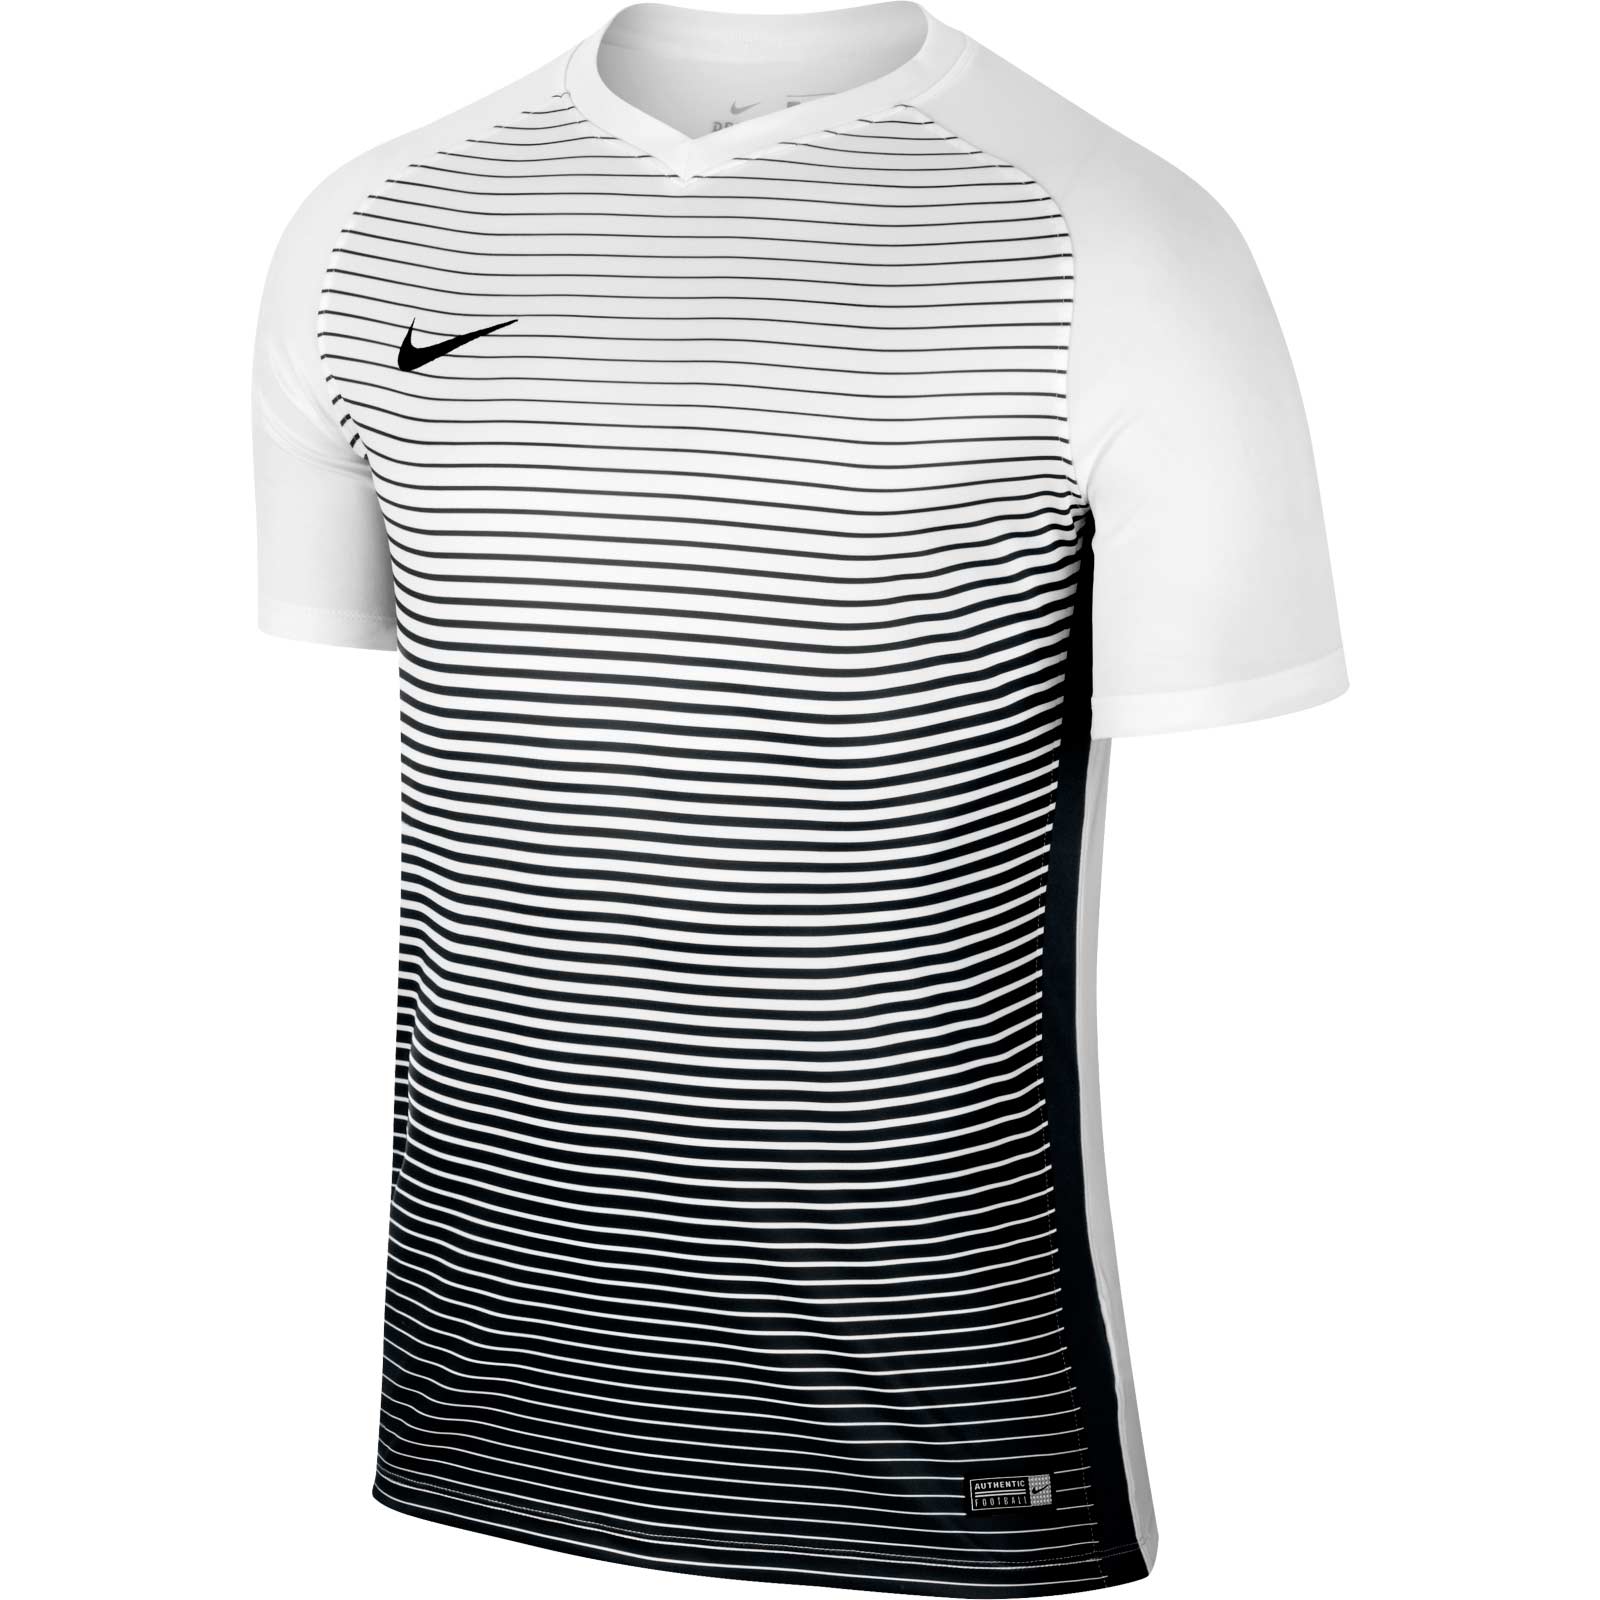 Third Kit-Inspired | All-New Nike Precision IV 2017 Teamwear Jerseys ...